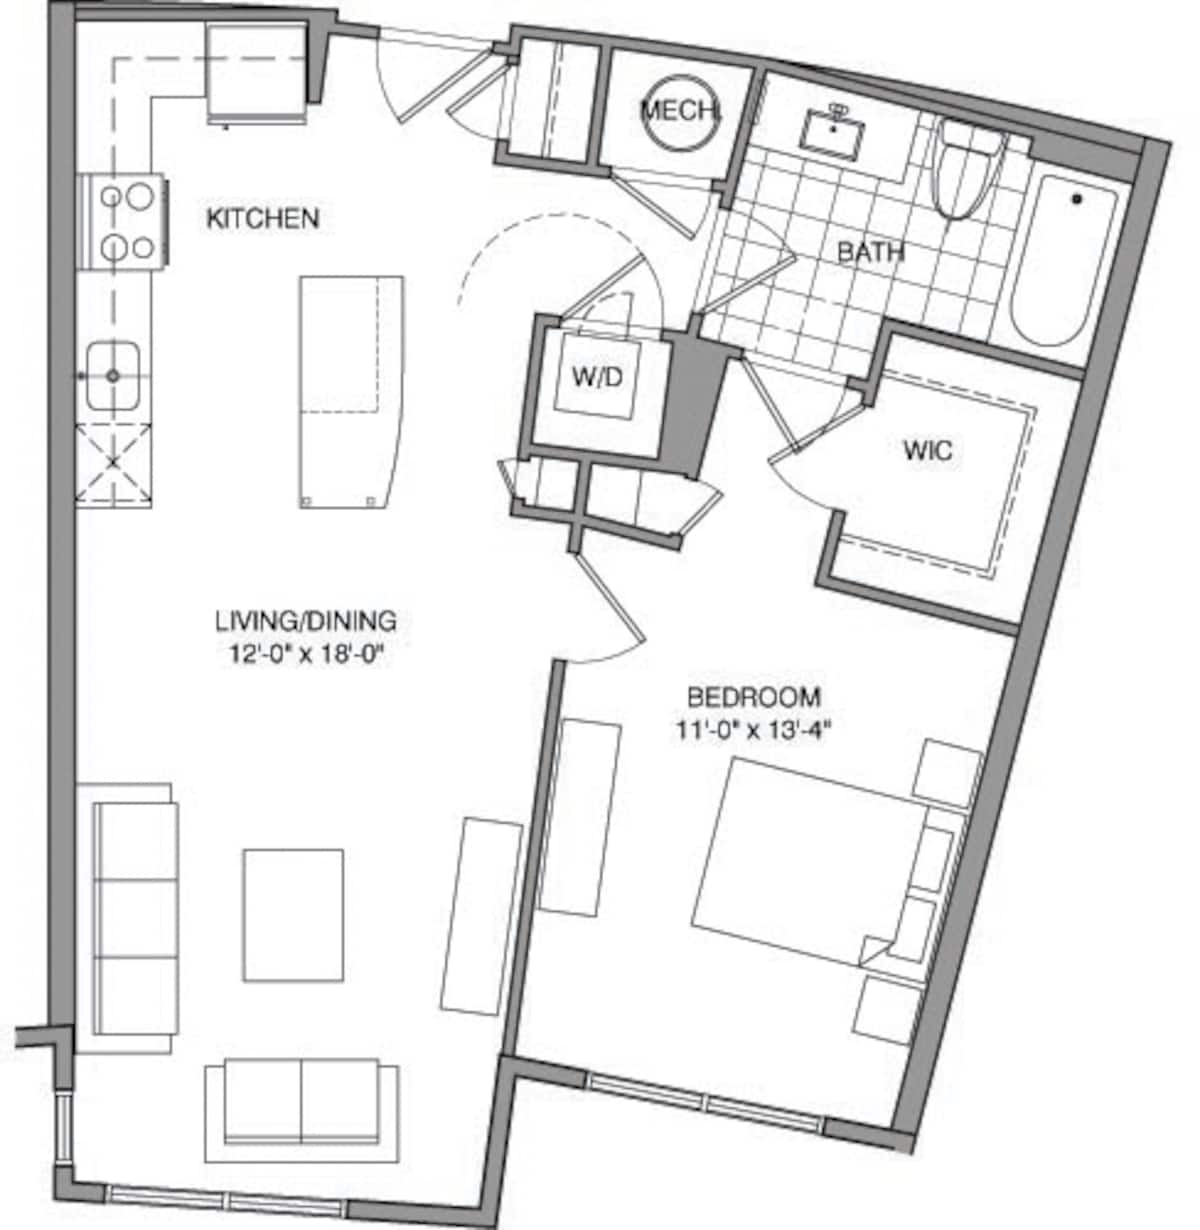 Floorplan diagram for 1 Bdrm B, showing 1 bedroom